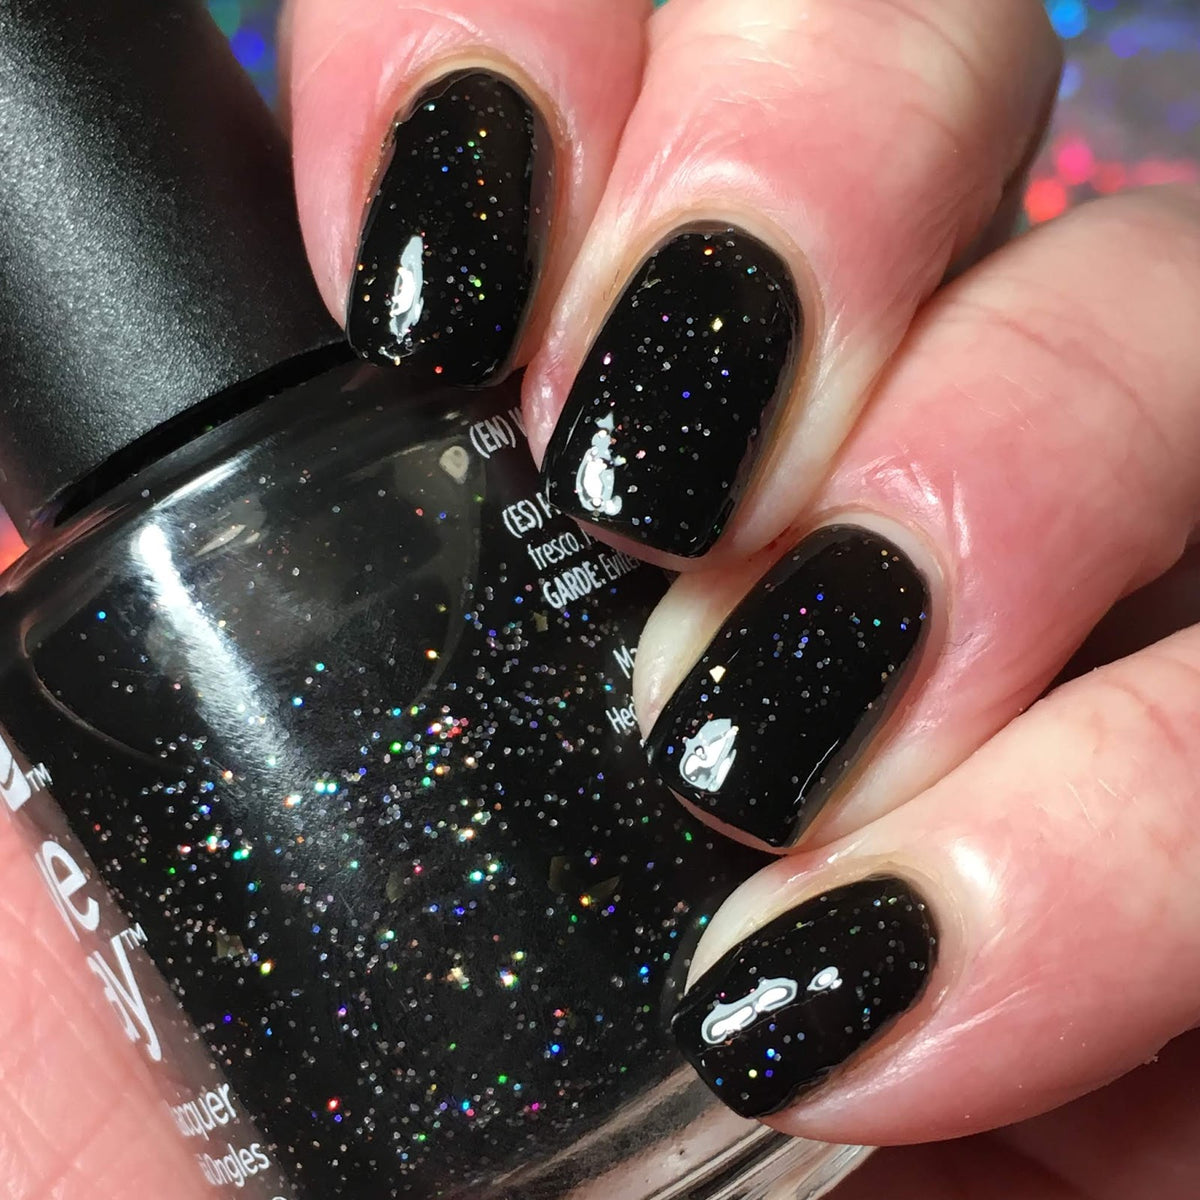 CND CREATIVE PLAY, Black glitter nail polish